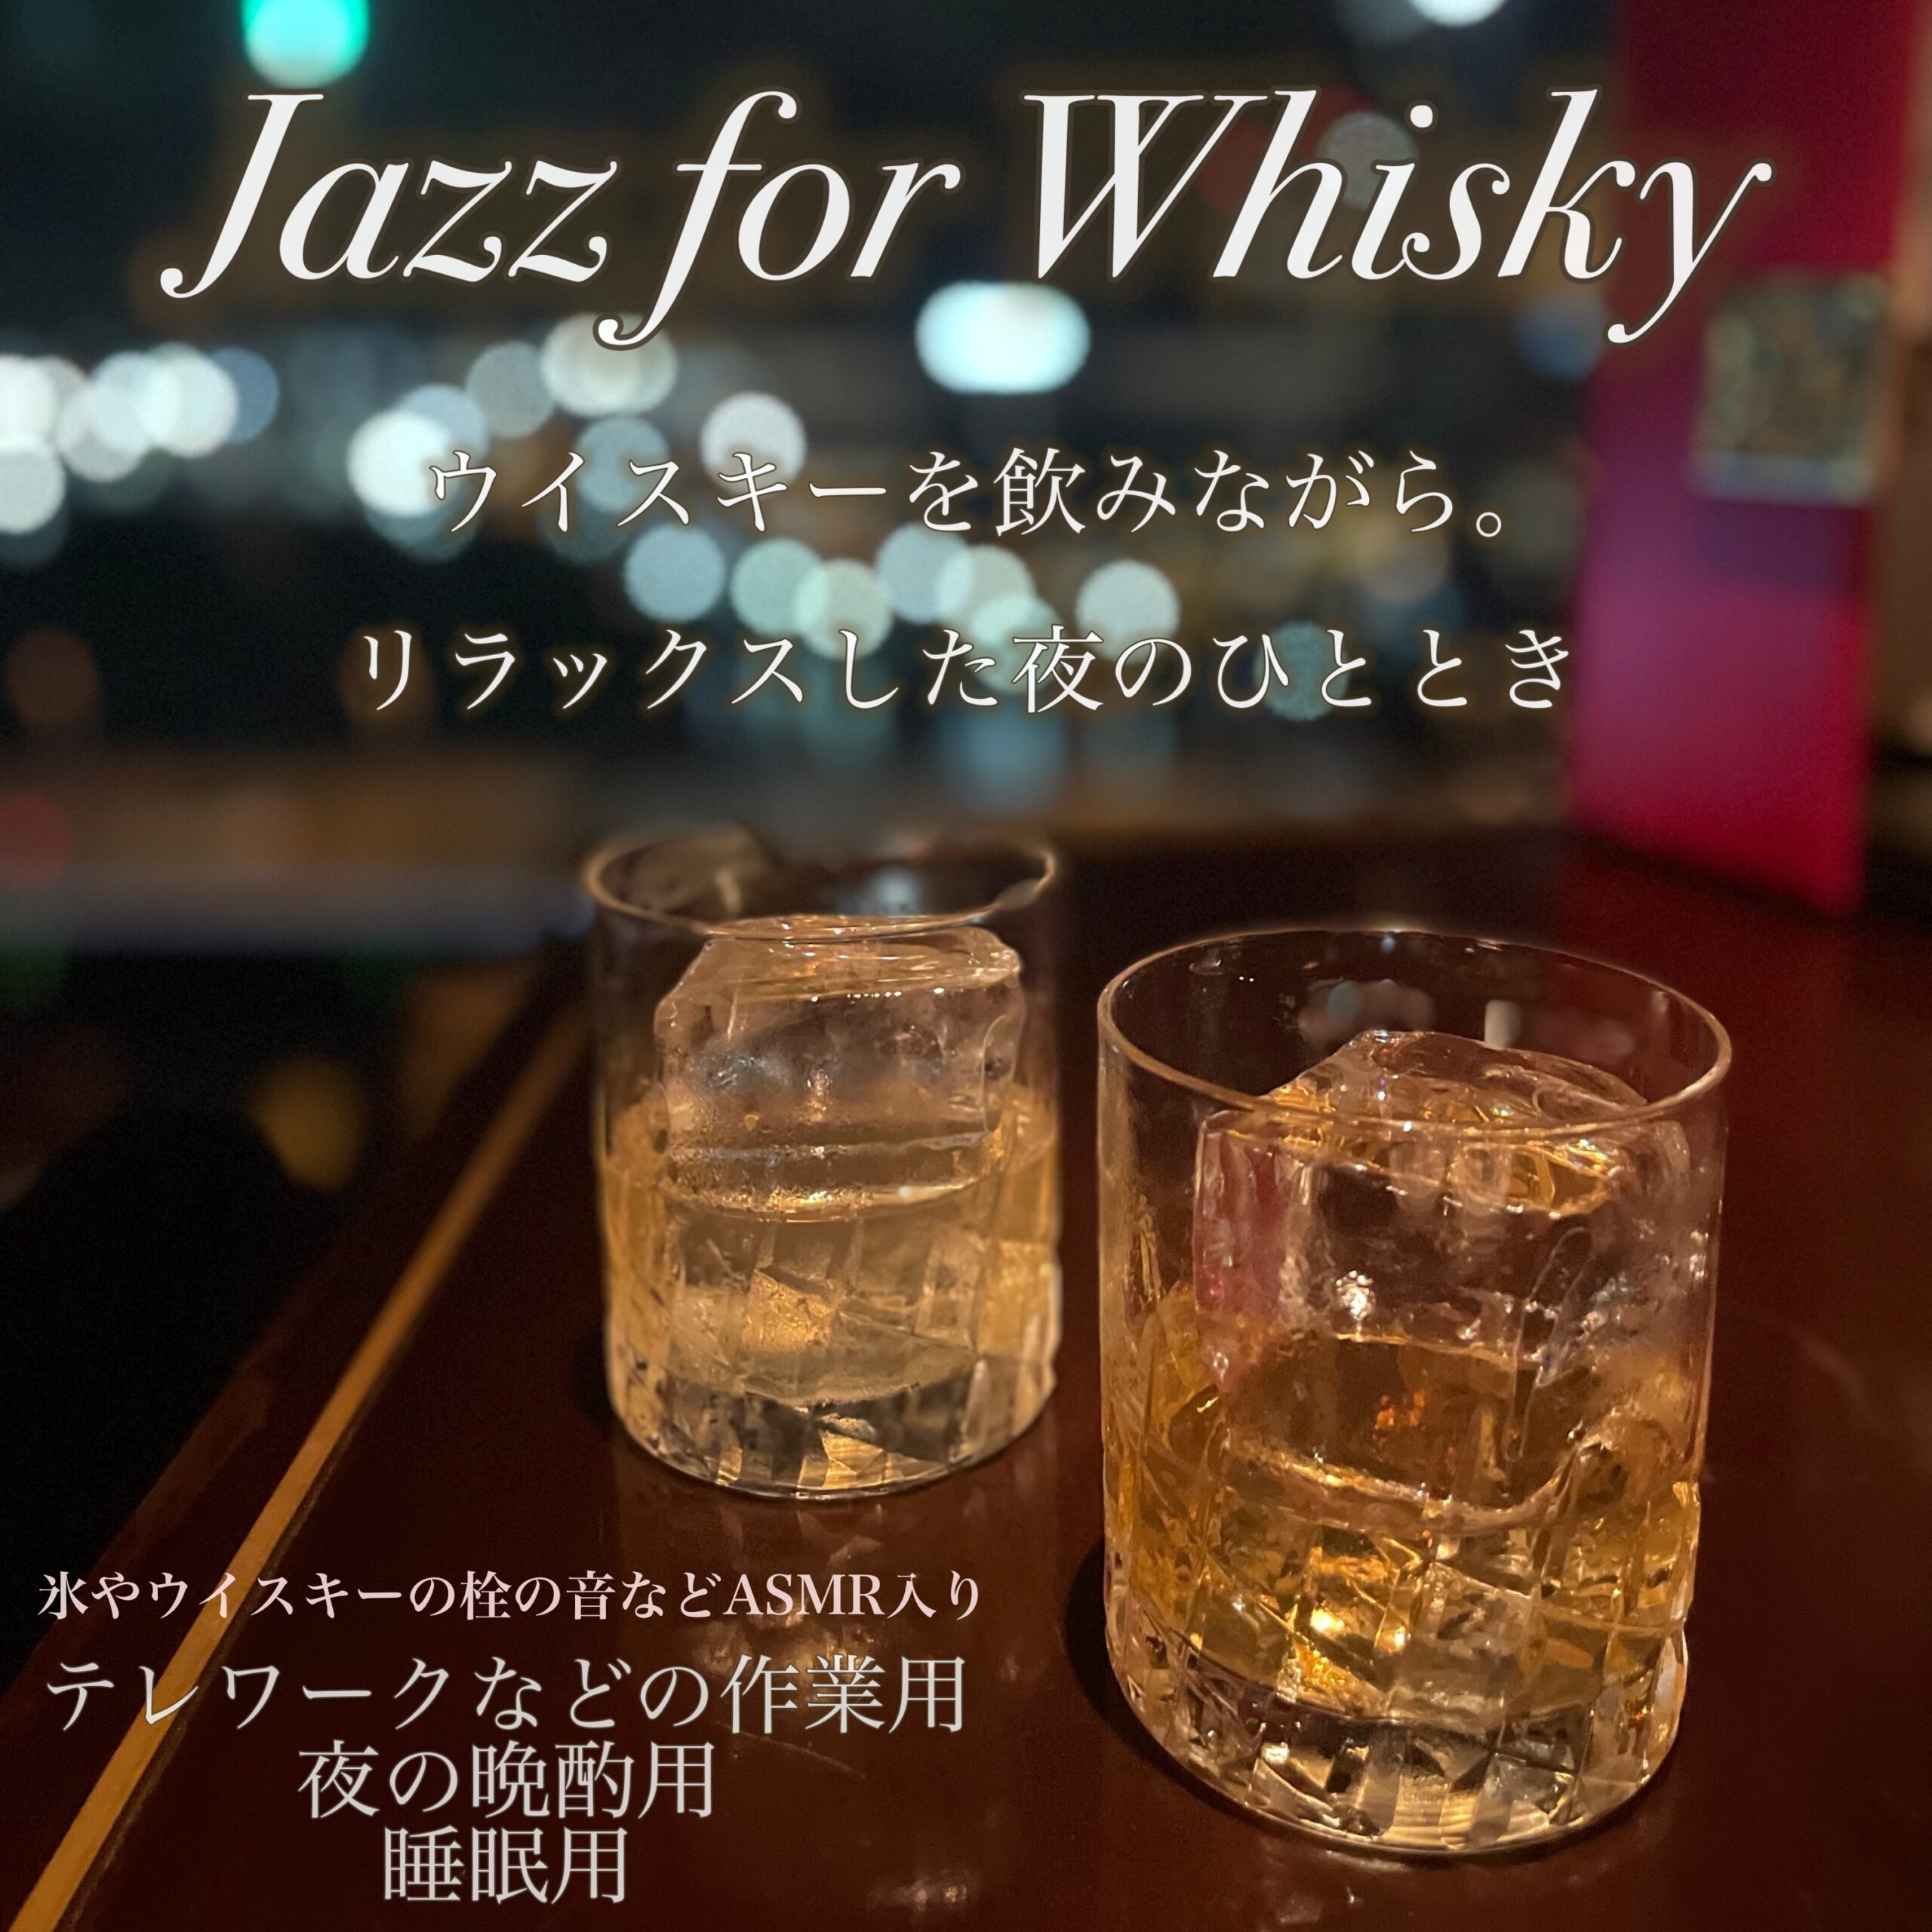 Jazz for Whisky ウィスキーを飲みながら。リラックスした夜のひととき 氷やウイスキーの栓の音などASMR入り テレワークなどの作業用 夜の晩酌用 睡眠用